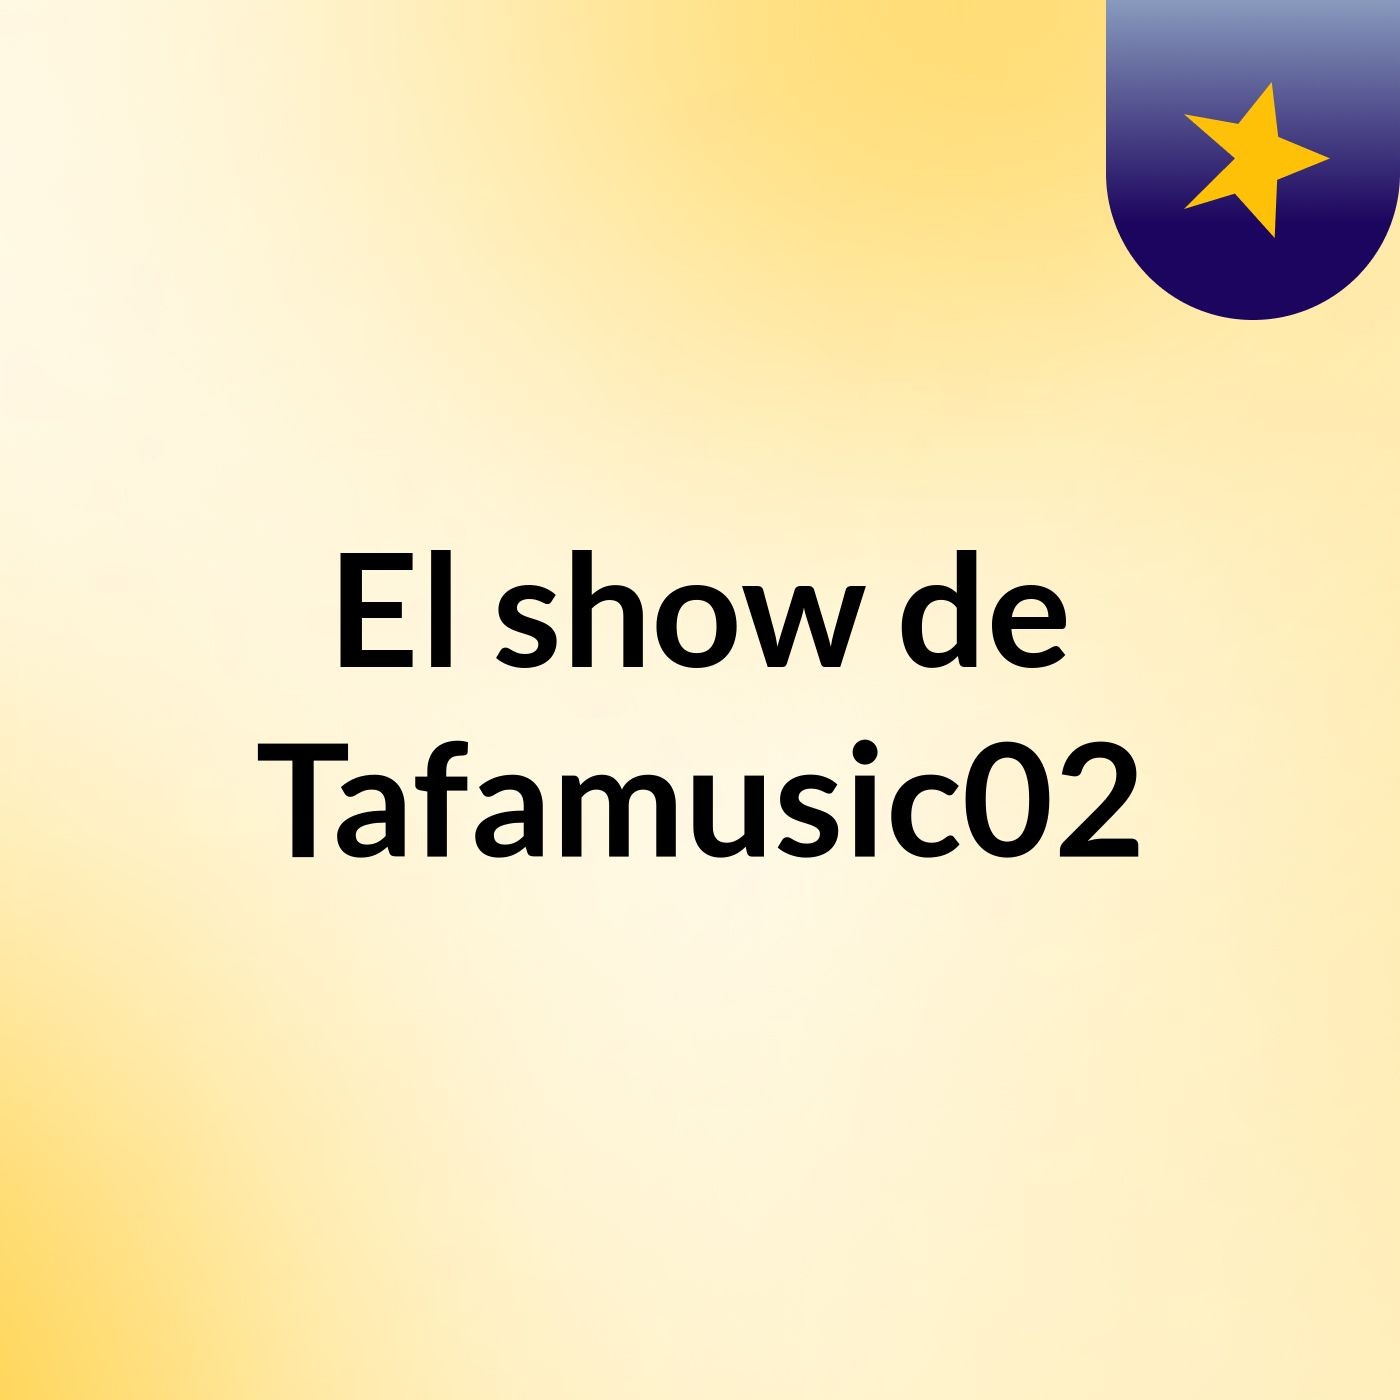 El show de Tafamusic02